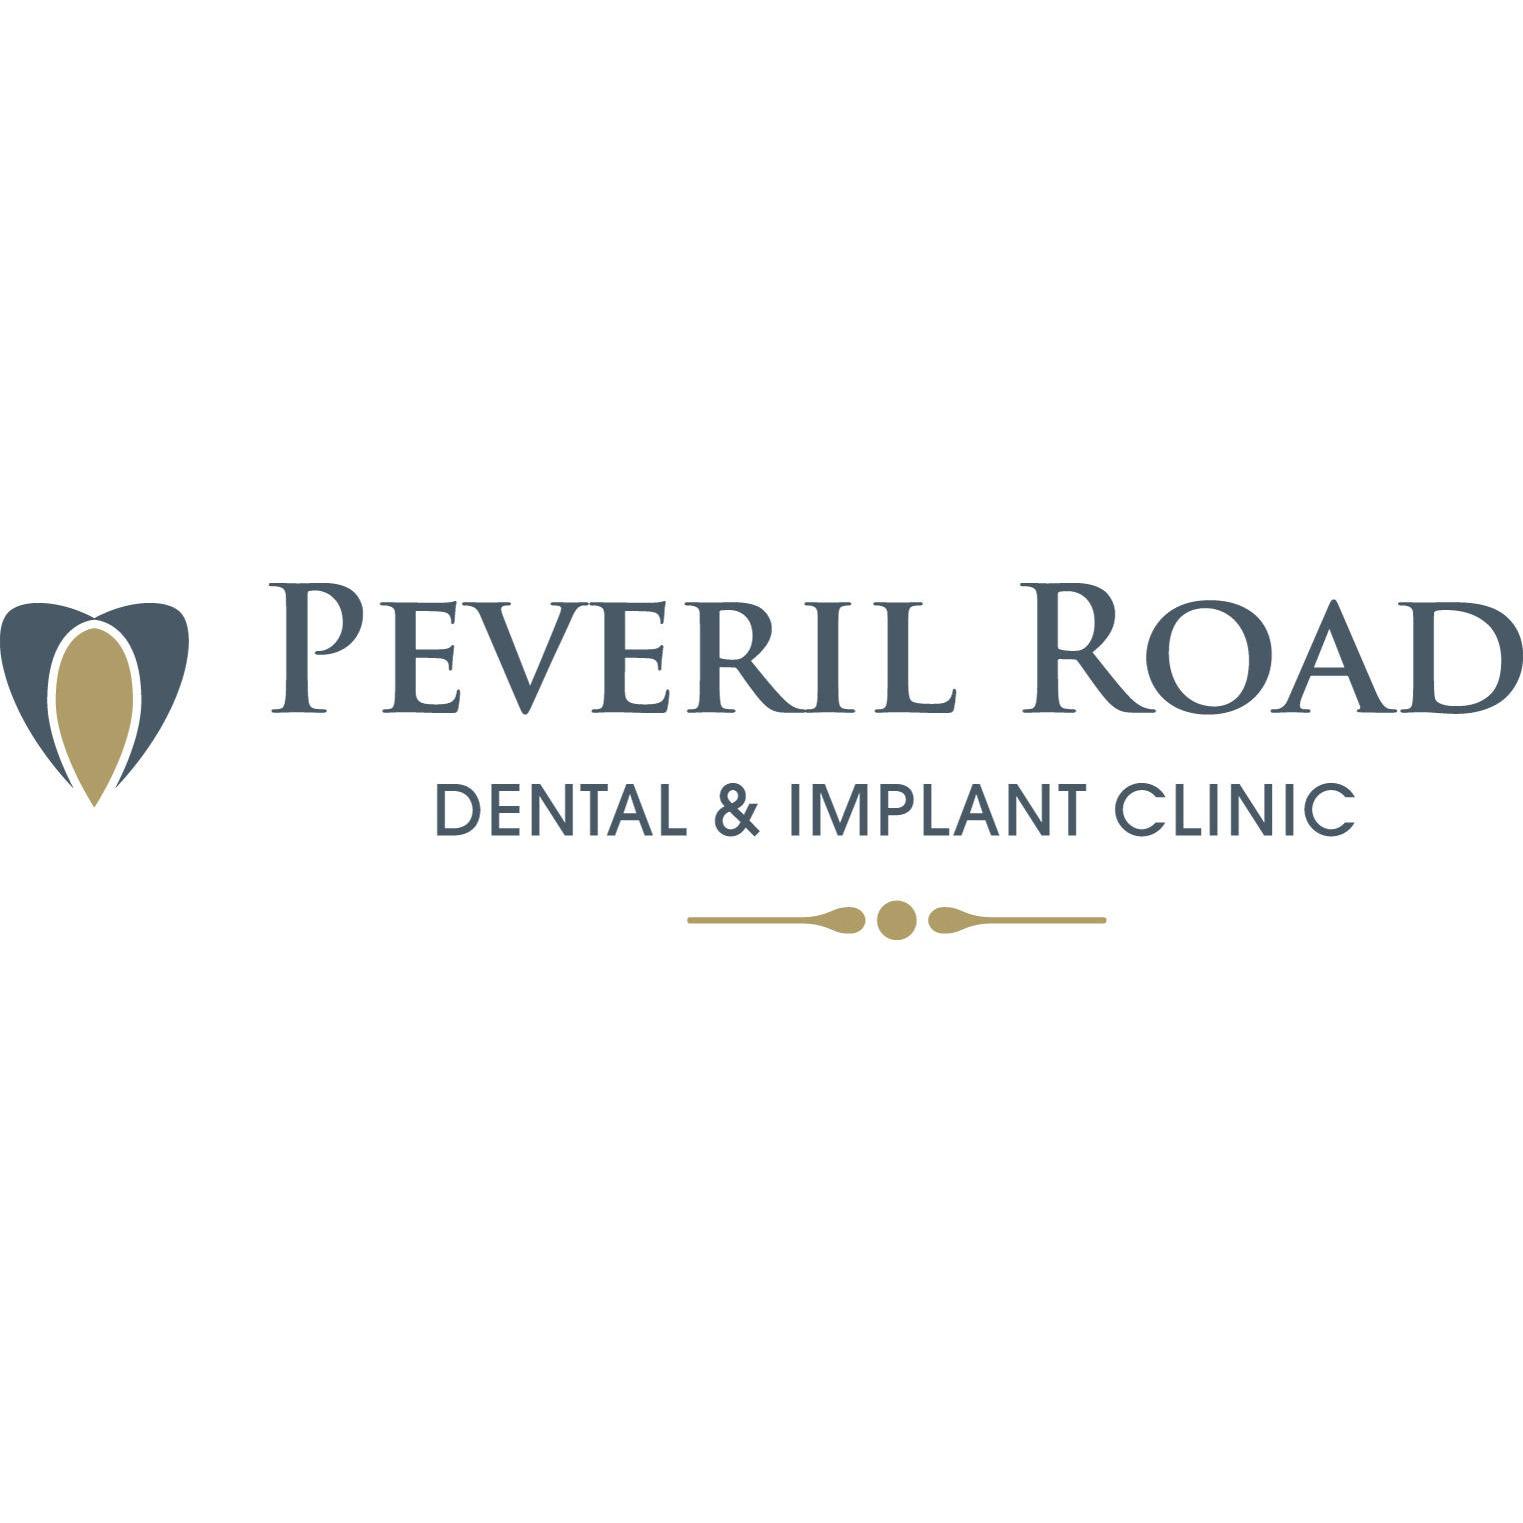 Peveril Road Dental & Implant Clinic - Nottingham, Nottinghamshire NG9 2HY - 01157 590129 | ShowMeLocal.com